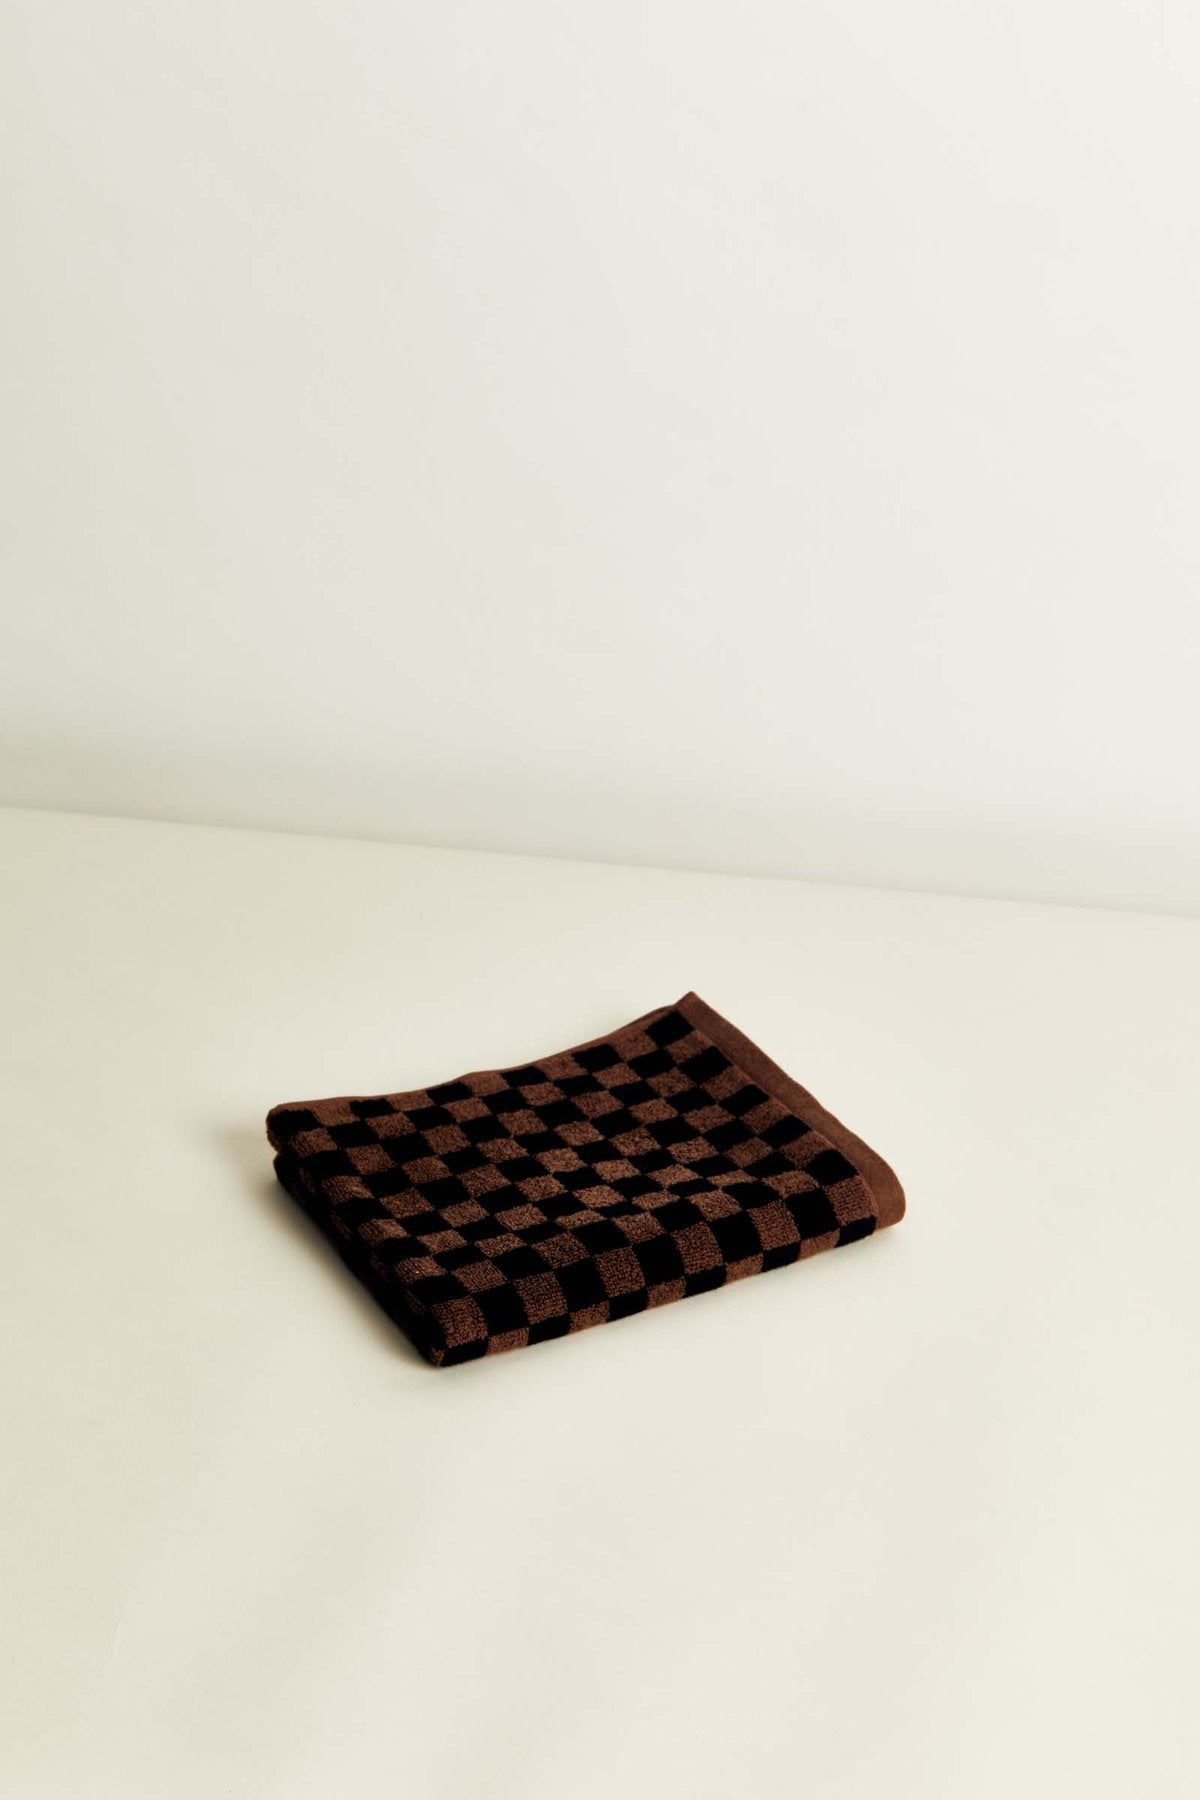 Josephine Hand towel in Tabac & Noir by Baina